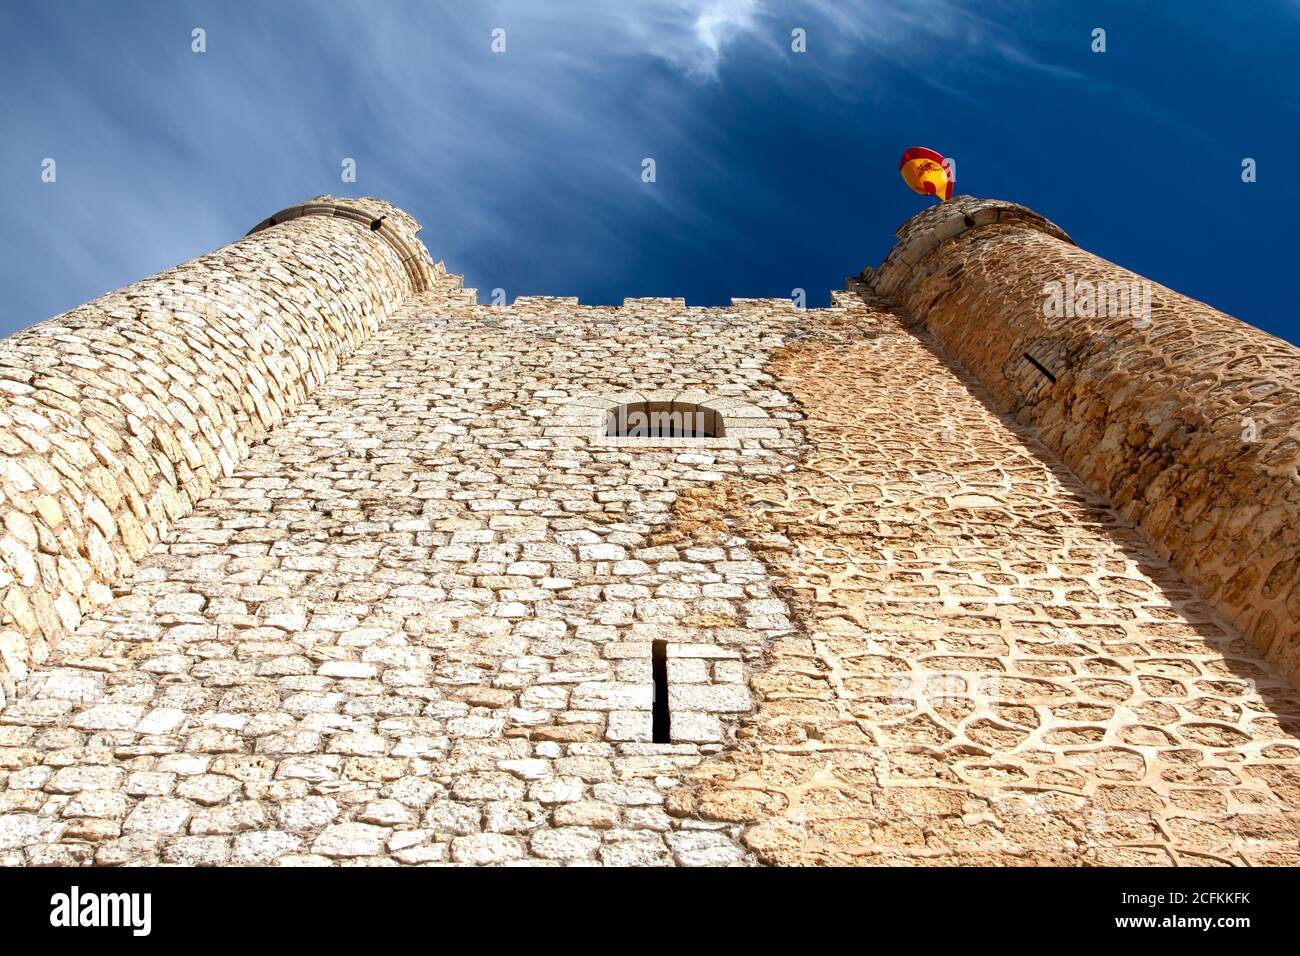 Castle of Alcala del Jucar, in the province of Albacete, Spain. Spanish medieval castle. Stock Photo